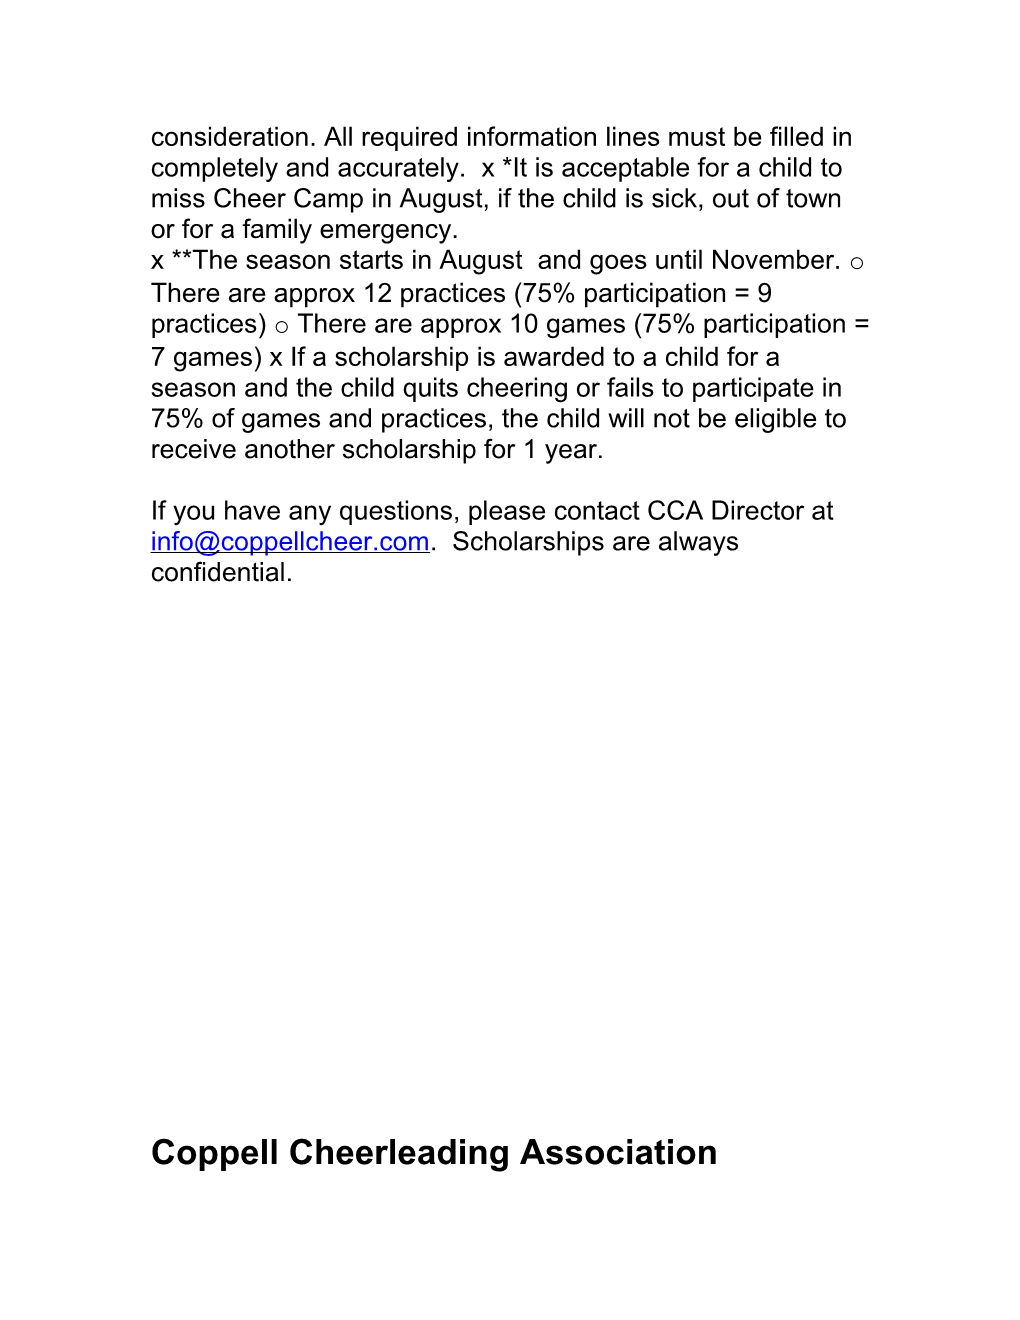 Coppell Cheerleading Association Scholarship Program